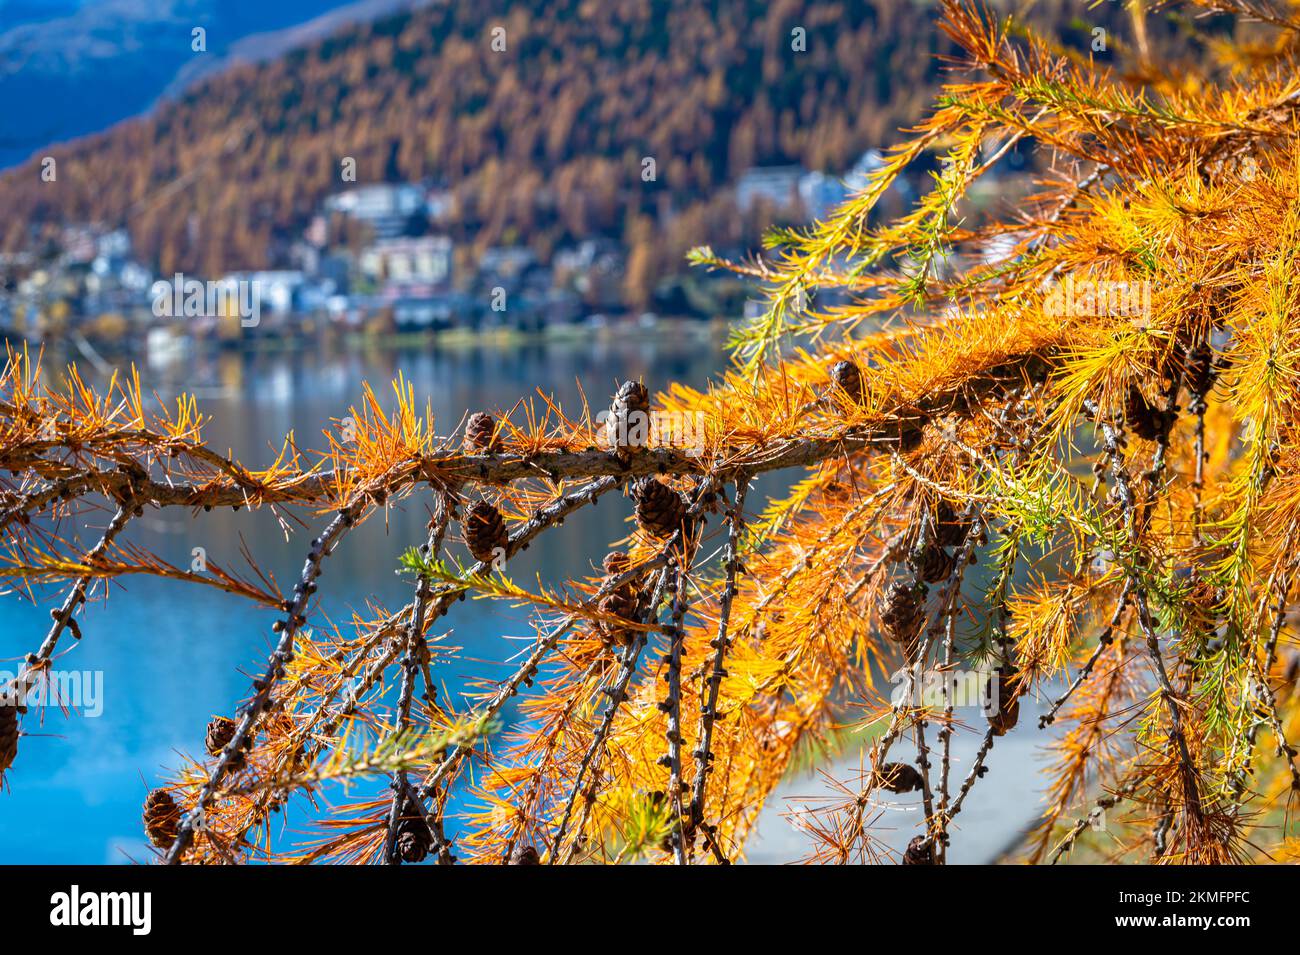 Vibrant yellow orange colored needles of a larch tree Larix decidua near Lake Saint Moritz, Switzerland. Stock Photo